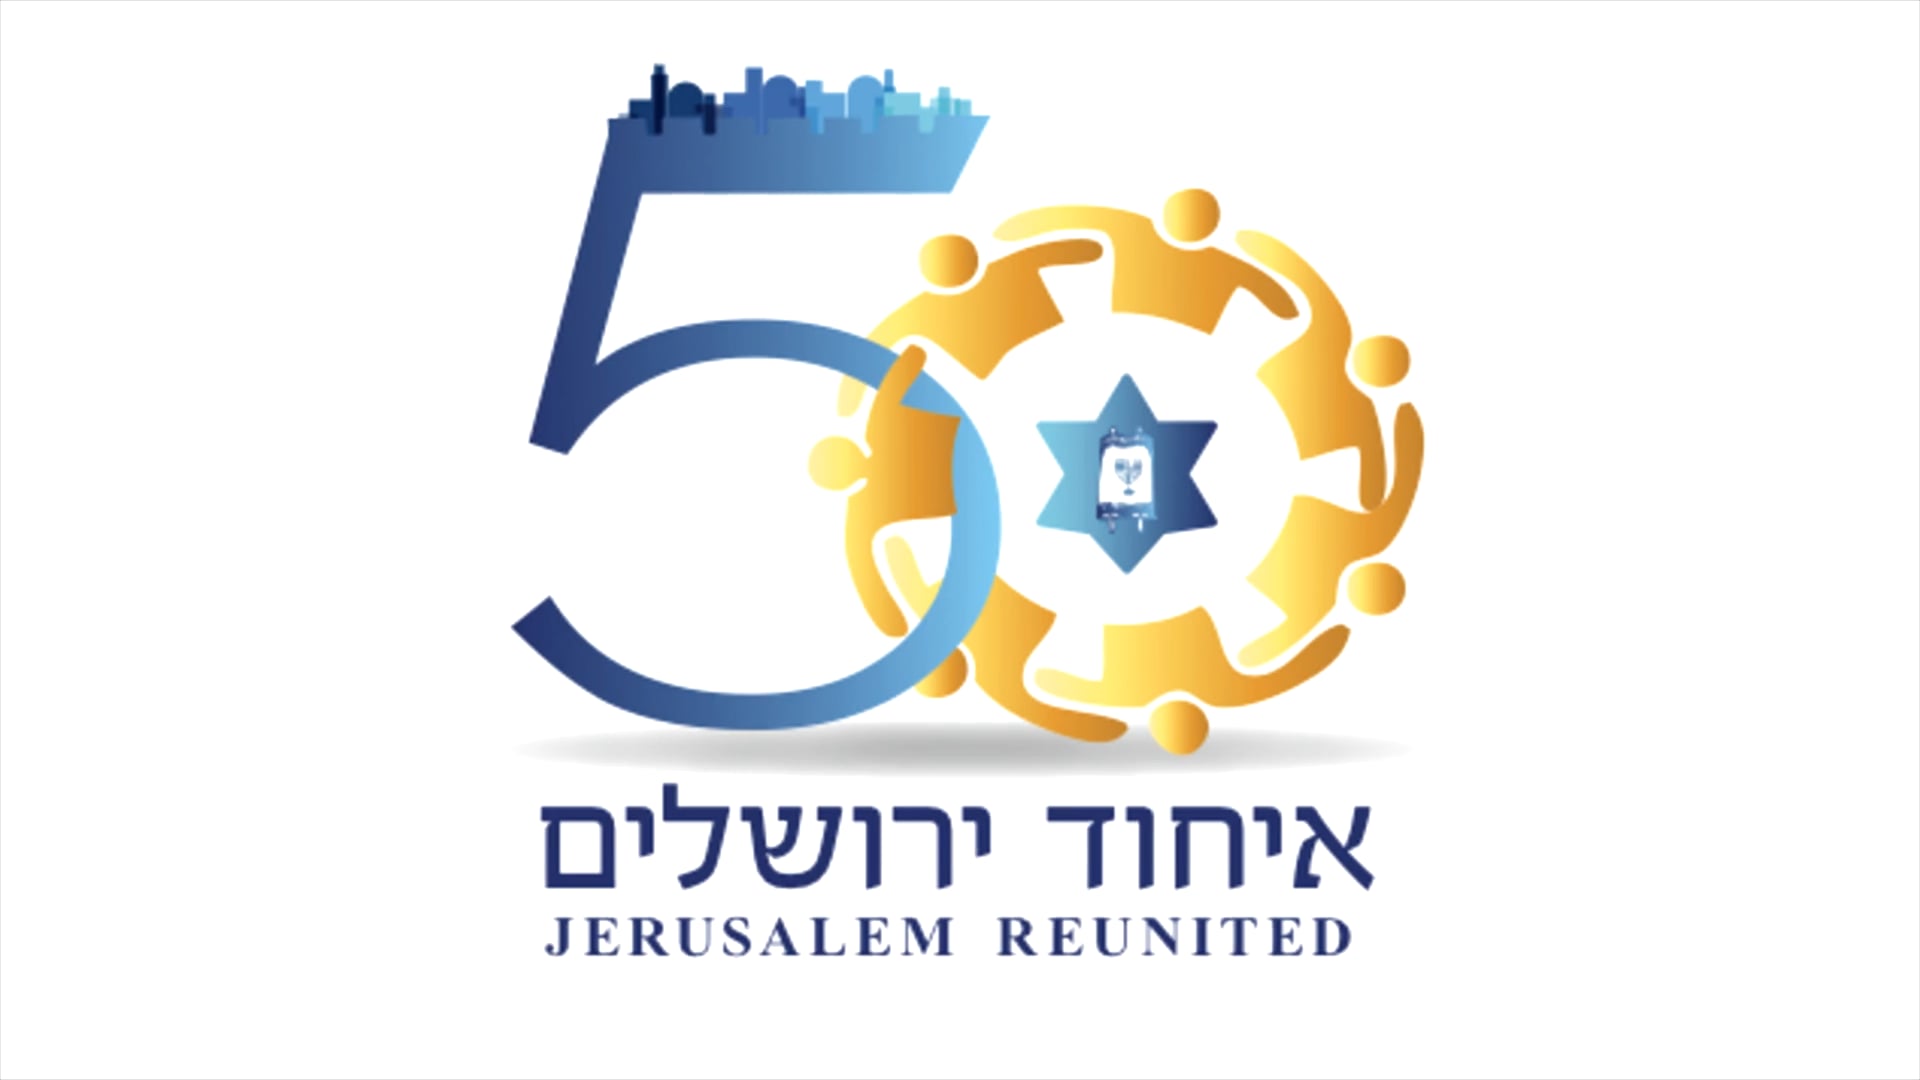 J50 Global Unity Torah Celebration